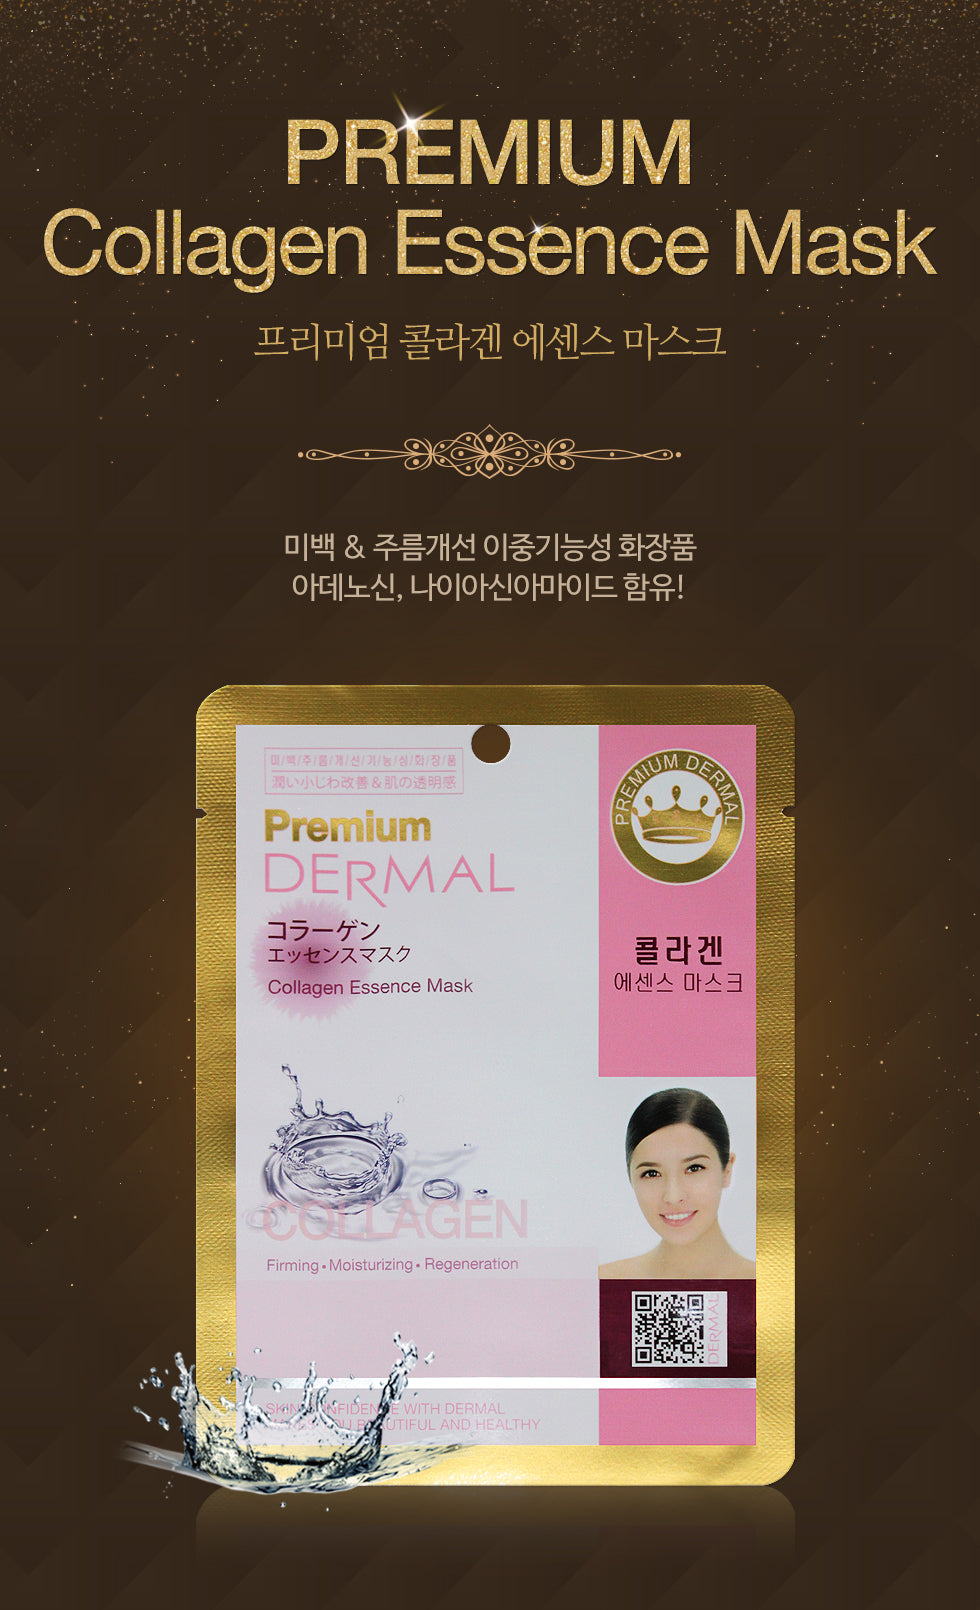 DERMAL Premium Collagen Essence Mask 10 Pieces - Dotrade Express. Trusted Korea Manufacturers. Find the best Korean Brands